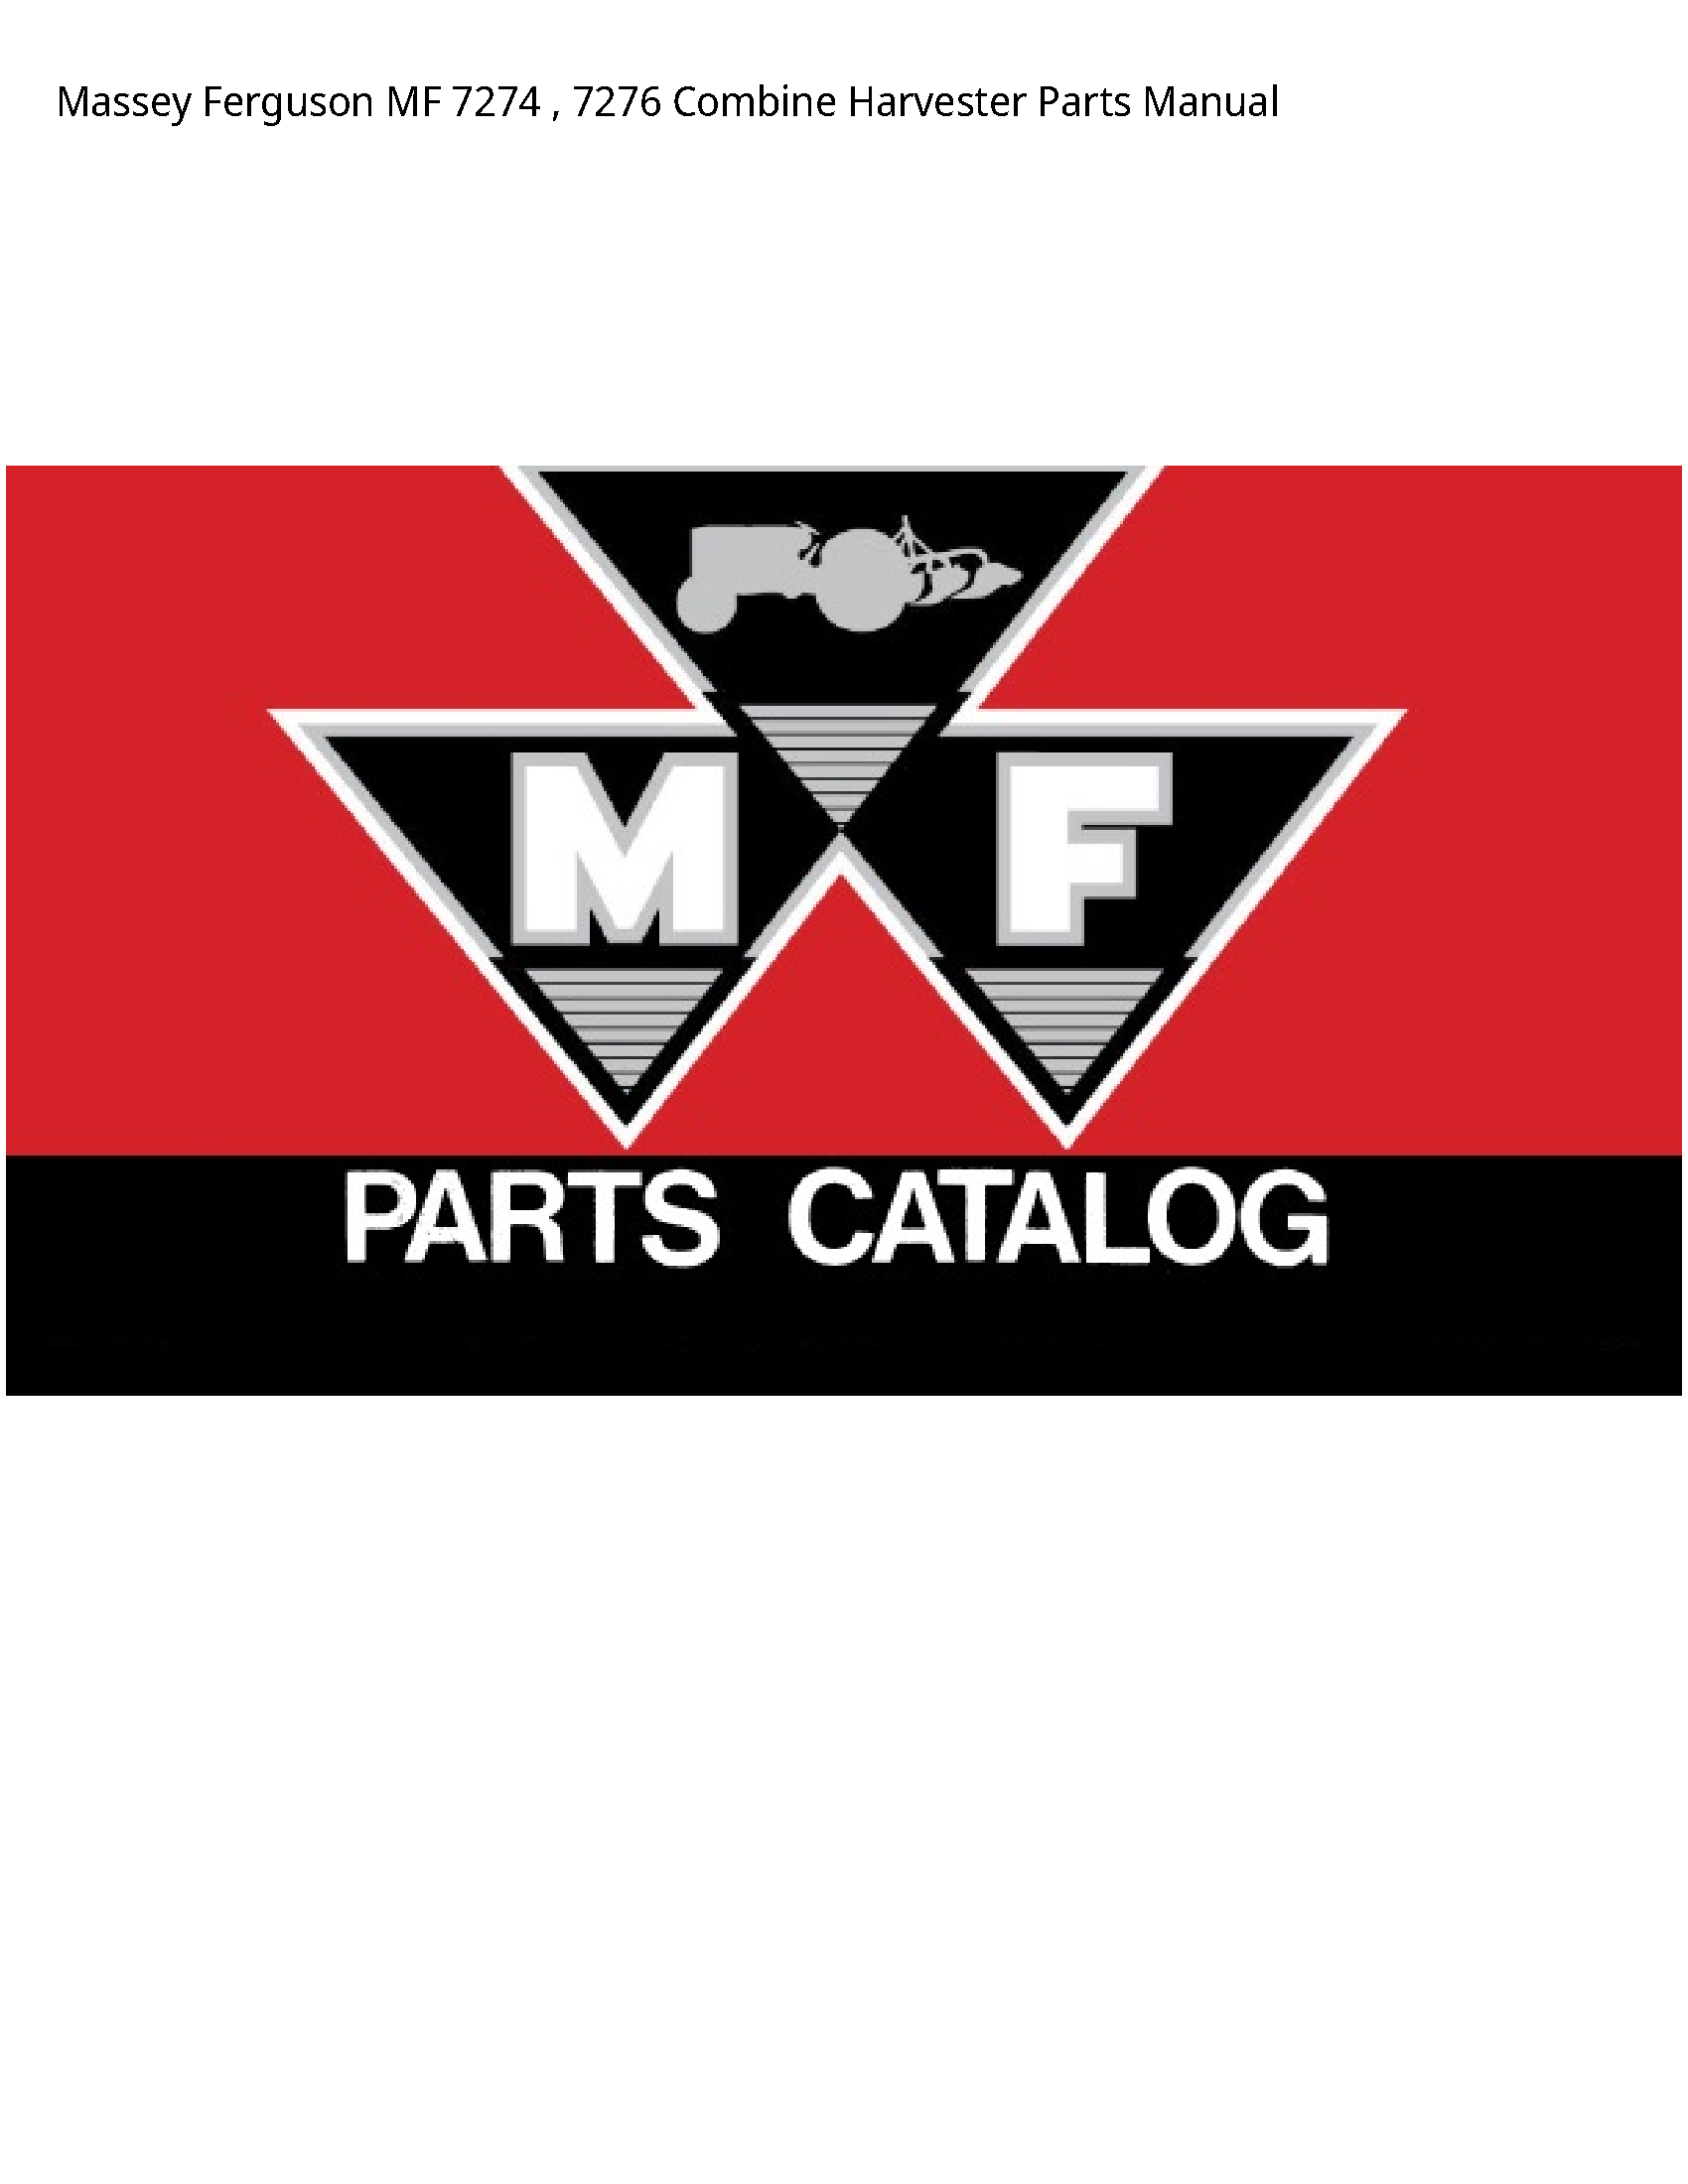 Massey Ferguson 7274 MF Combine Harvester Parts manual